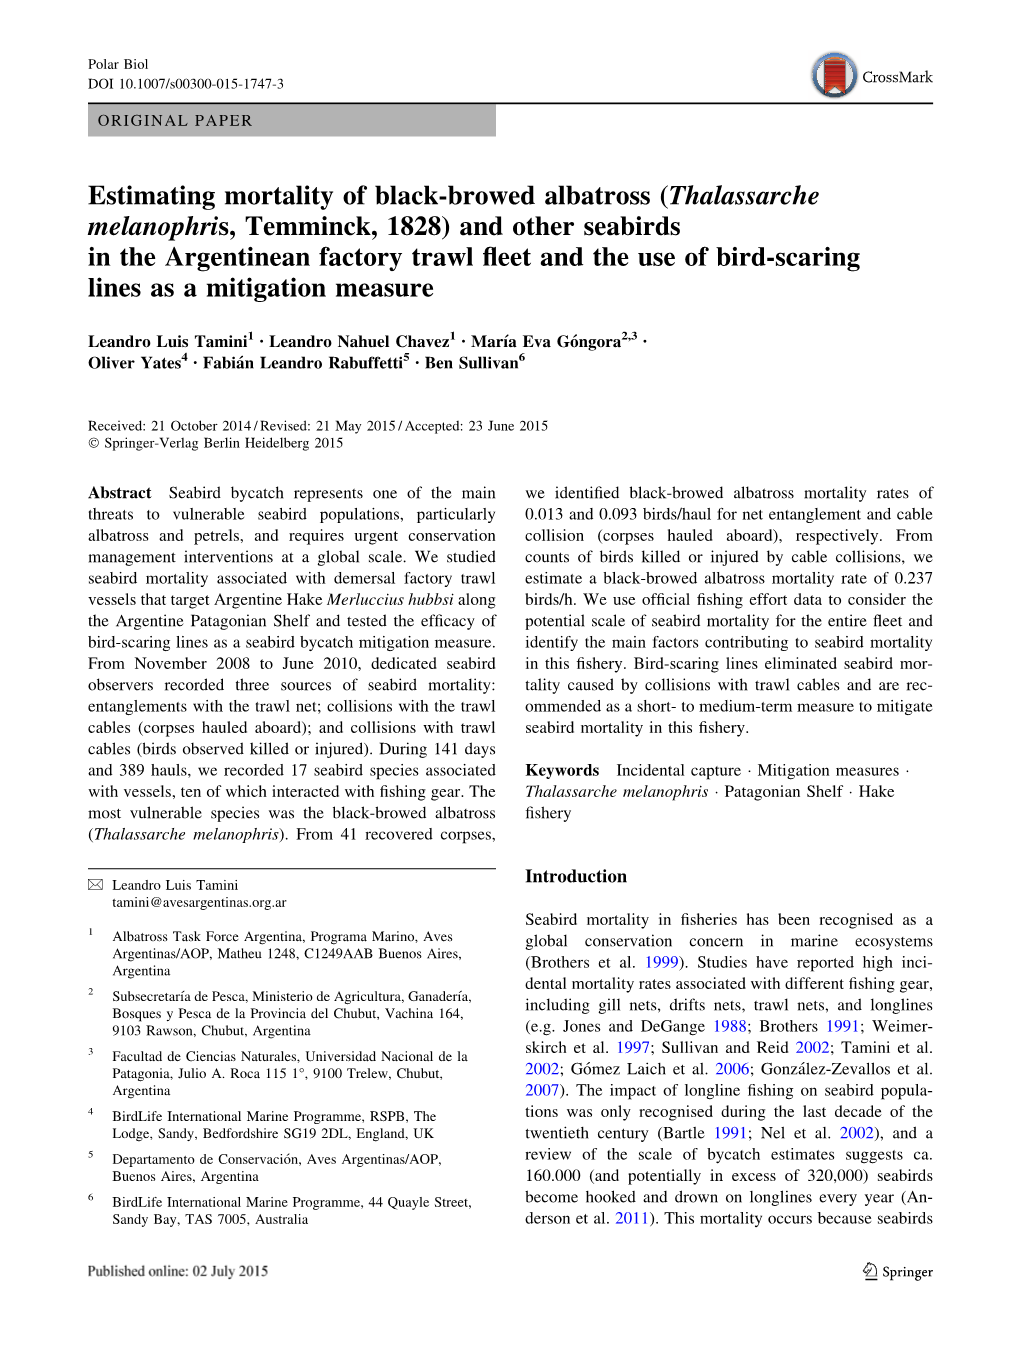 Estimating Mortality of Black-Browed Albatross